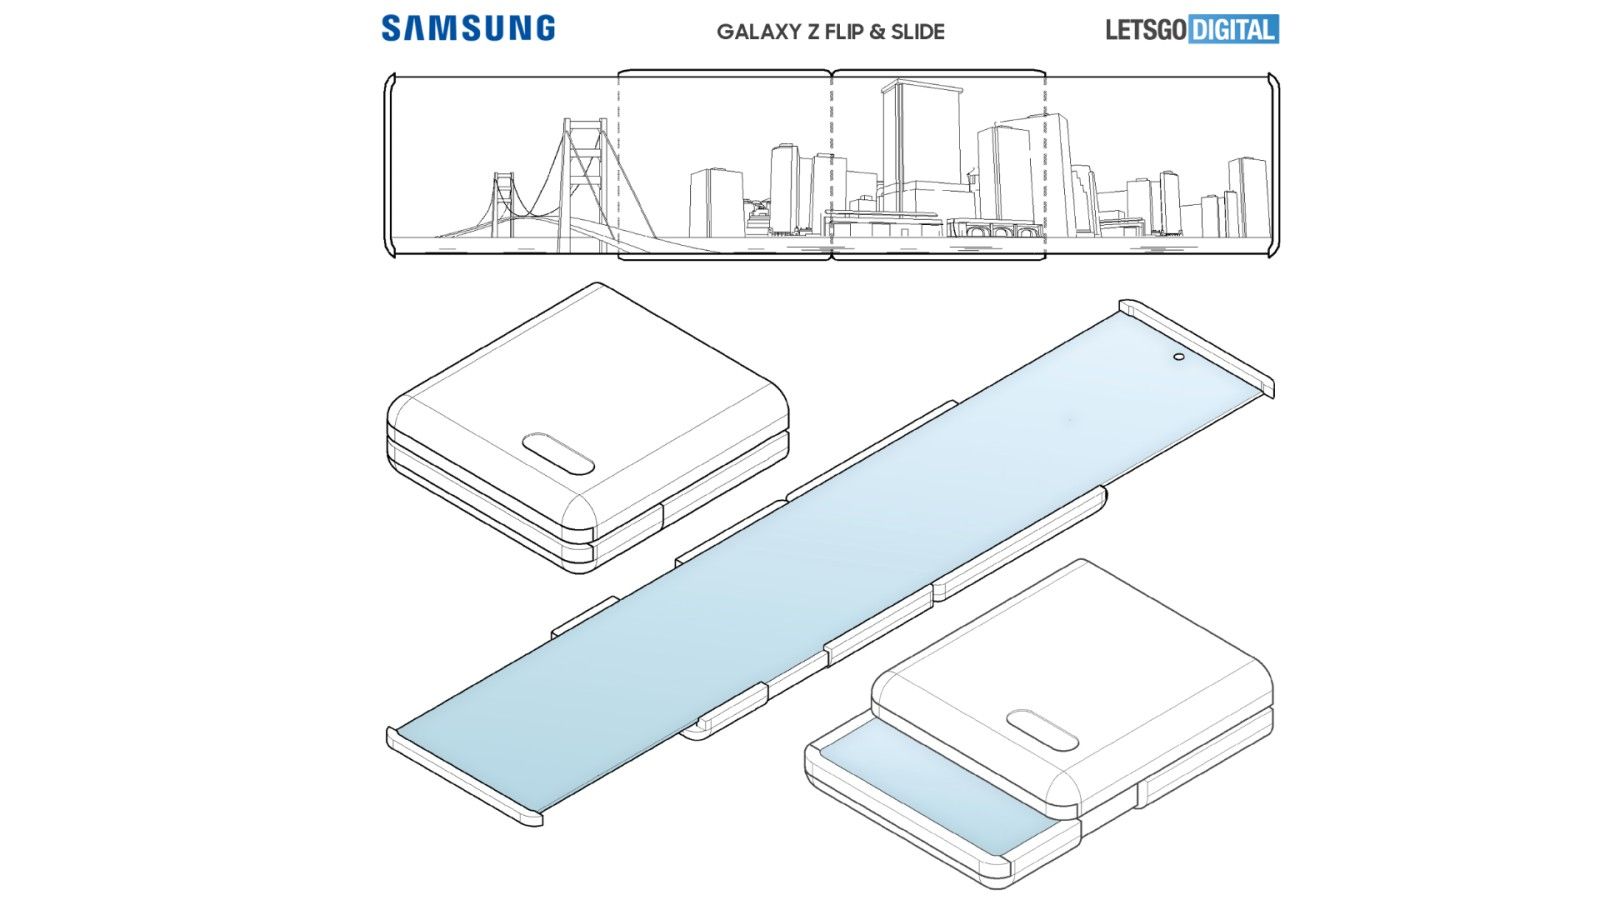 Samsung Galaxy Z Flip and Slide